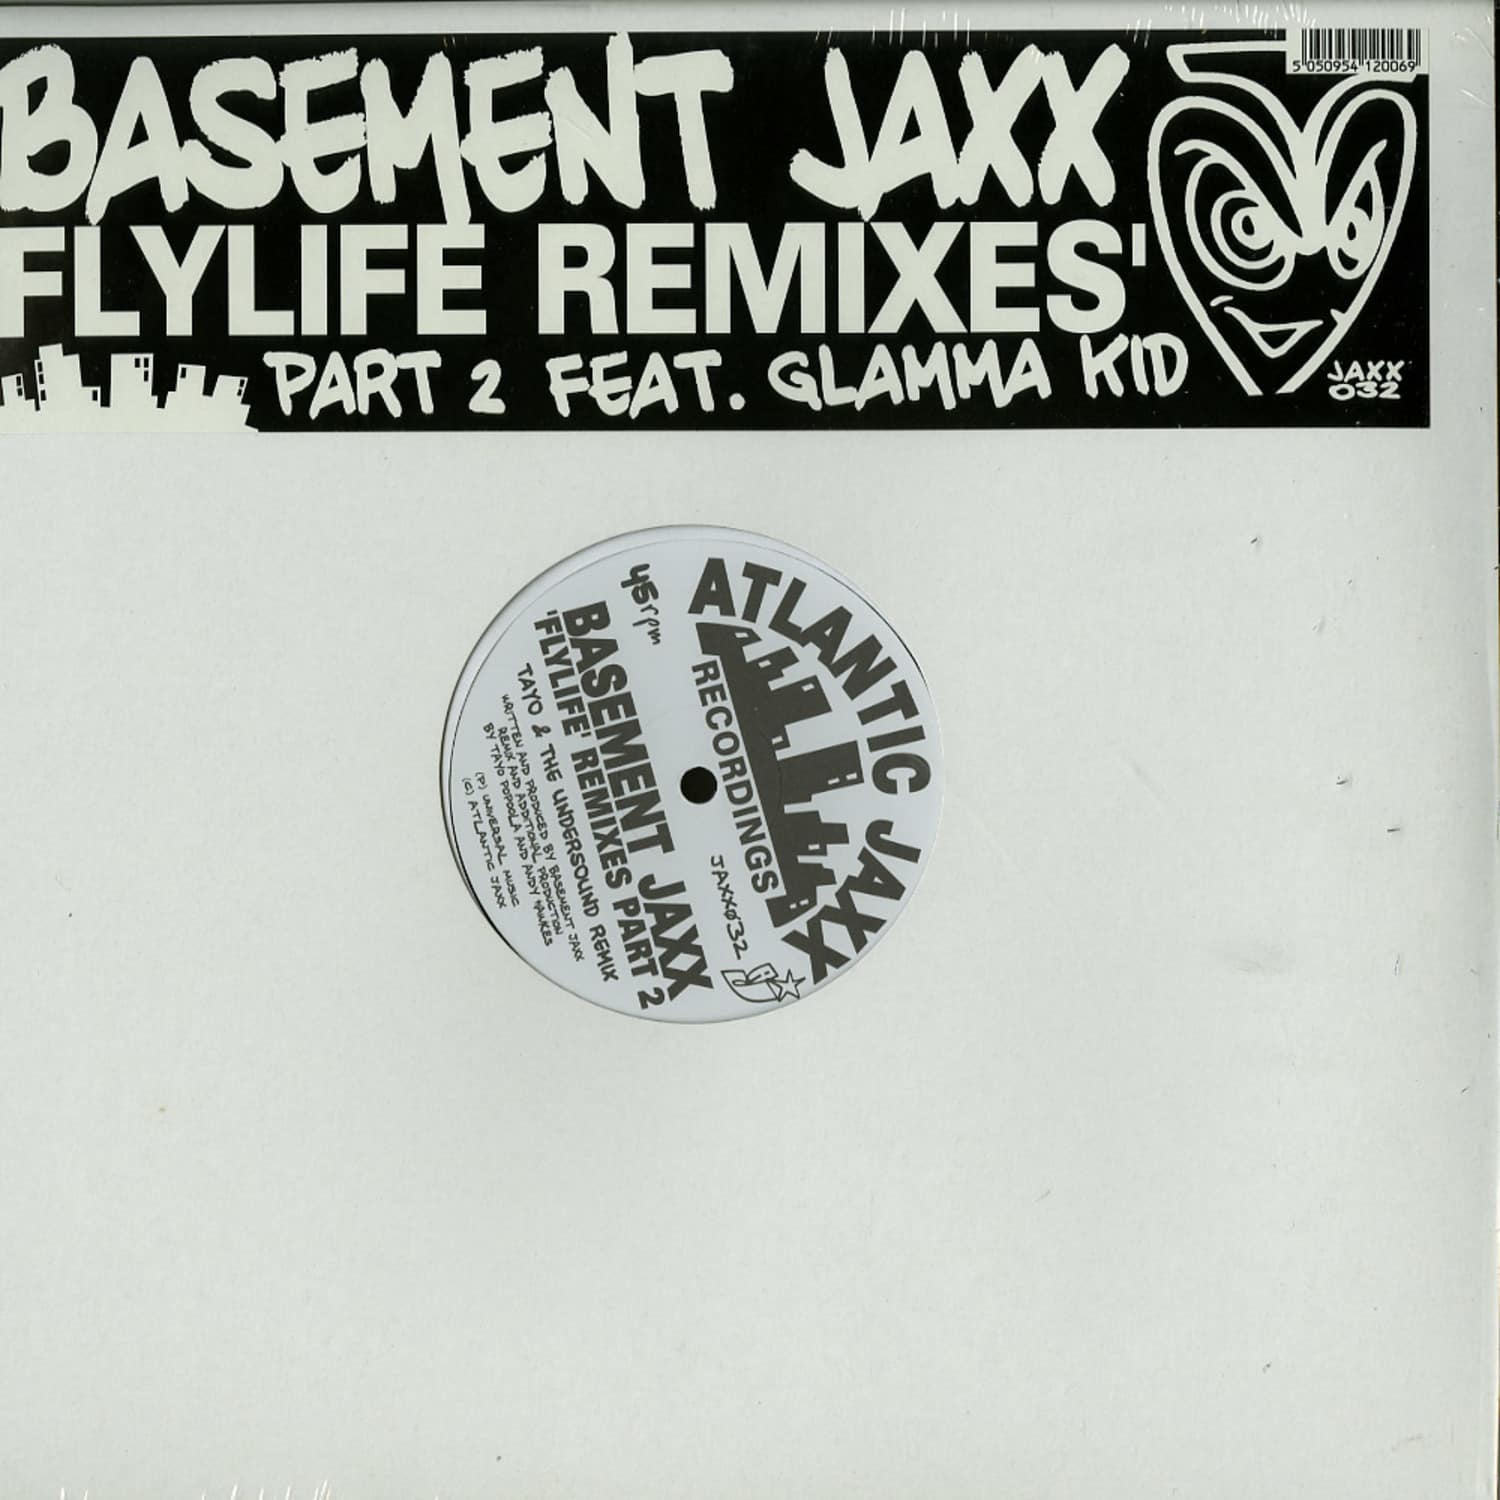 Basement Jaxx - FLY LIFE REMIXES